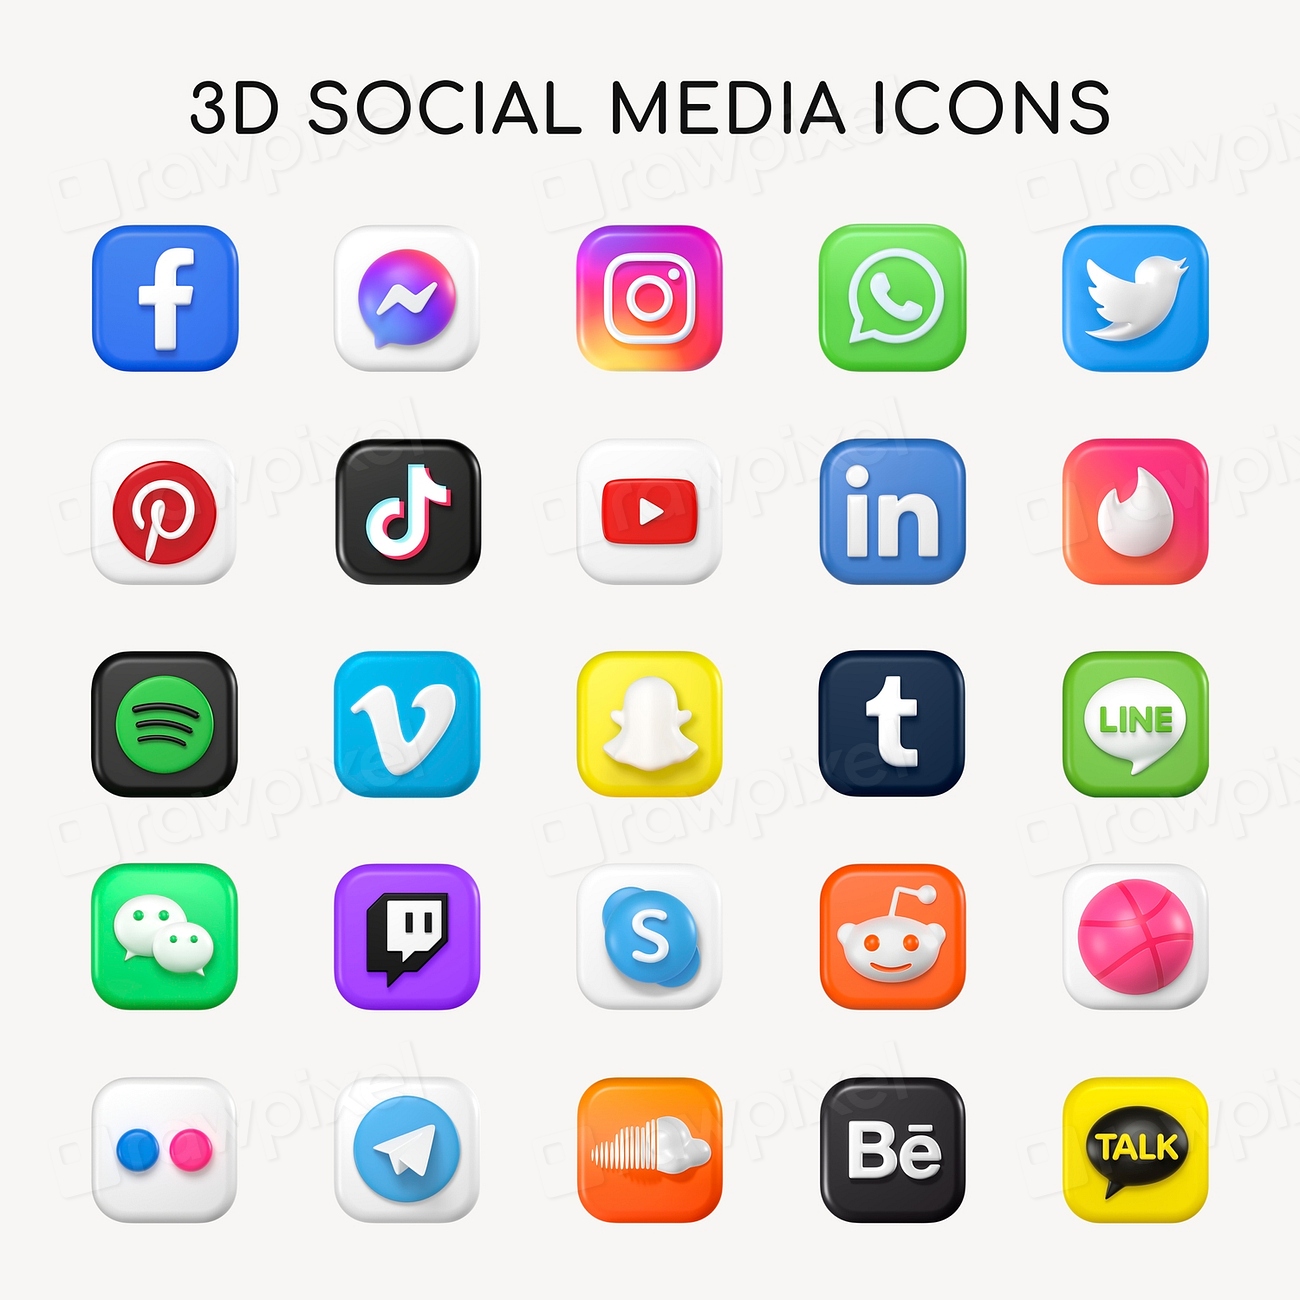 Popular social media icons psd | Premium PSD - rawpixel